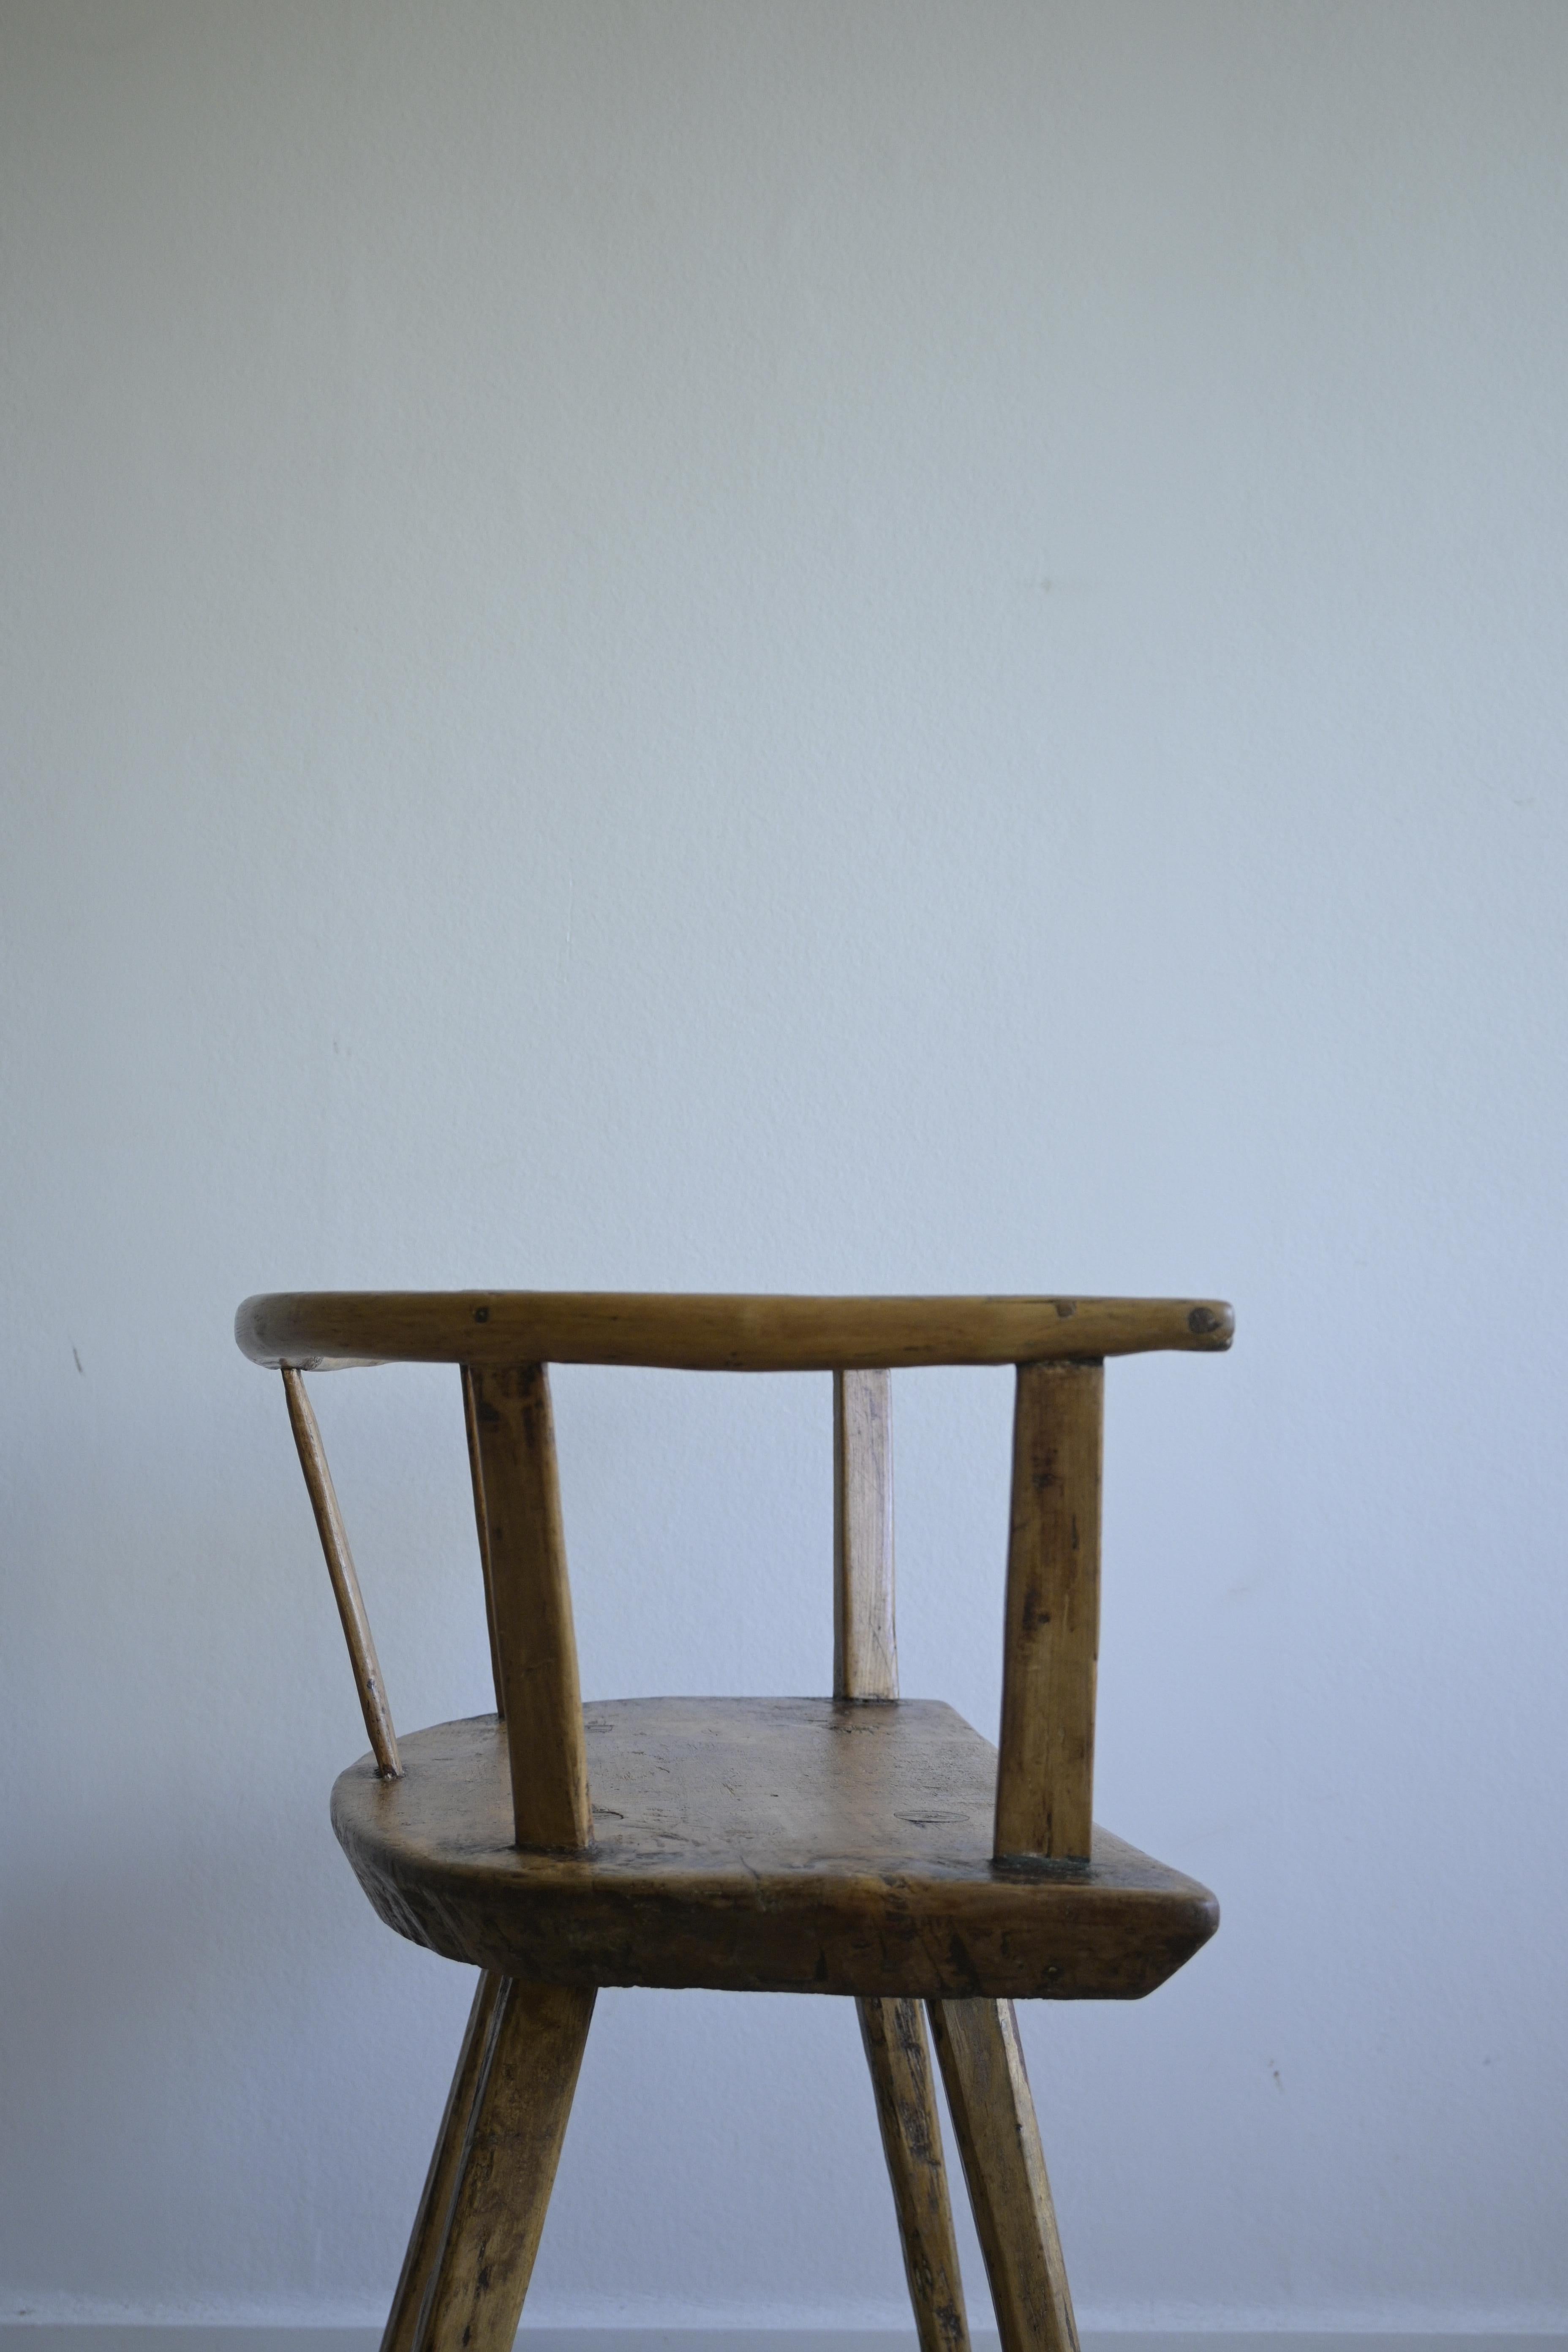 Norwegian Folk Art Chair 'Spinnastol' circa 1850 In Good Condition For Sale In Farsta, SE